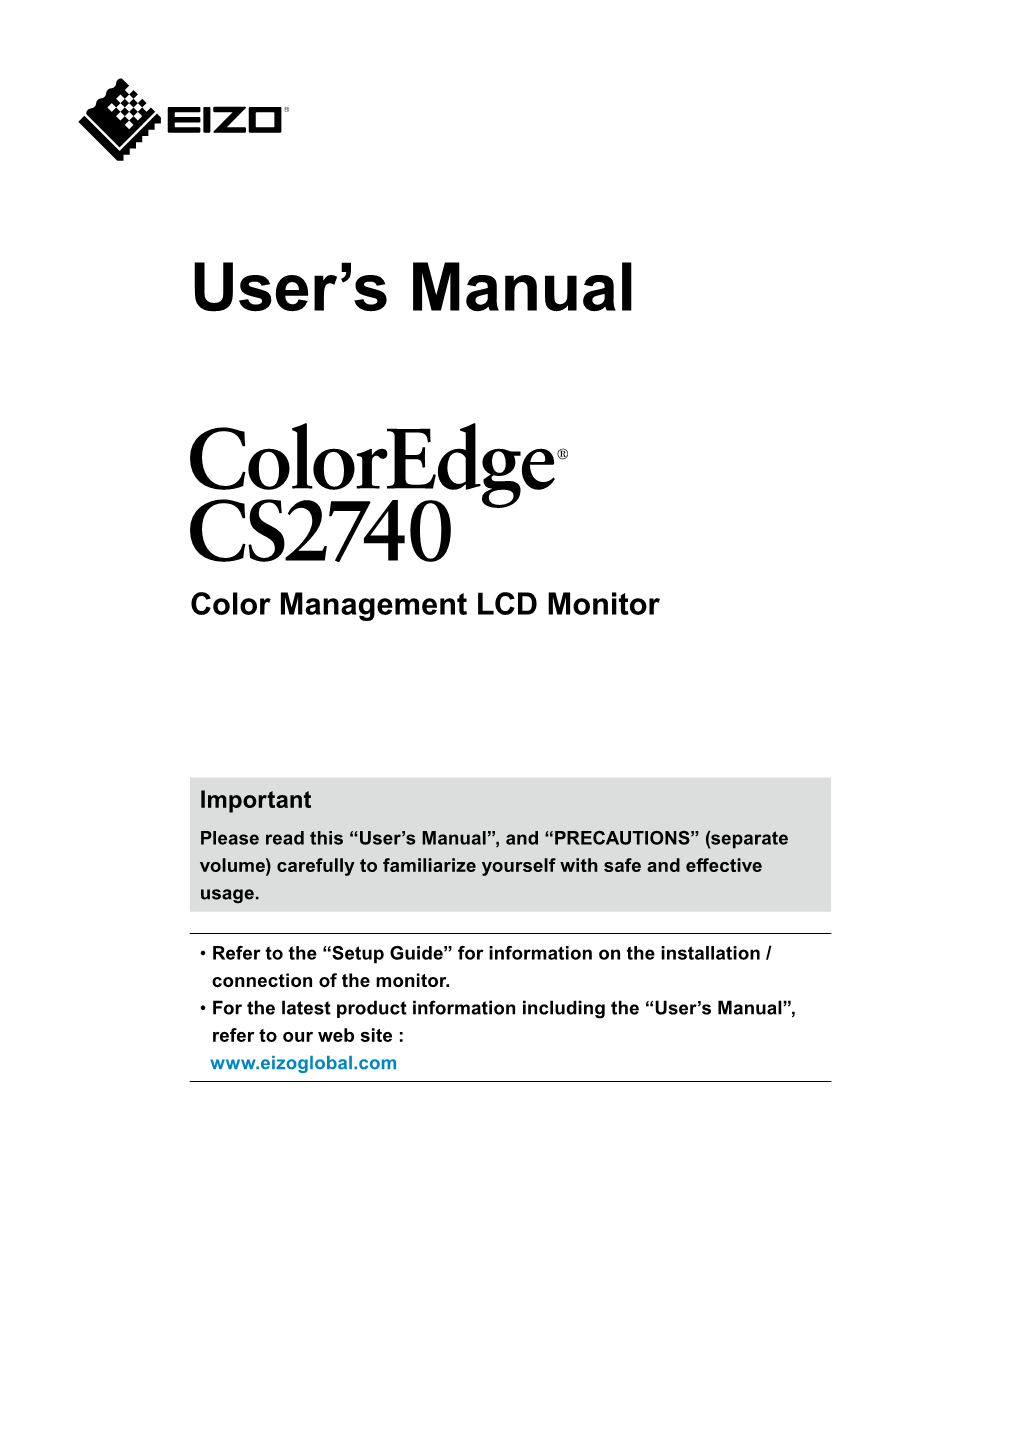 Coloredge CS2740 User's Manual